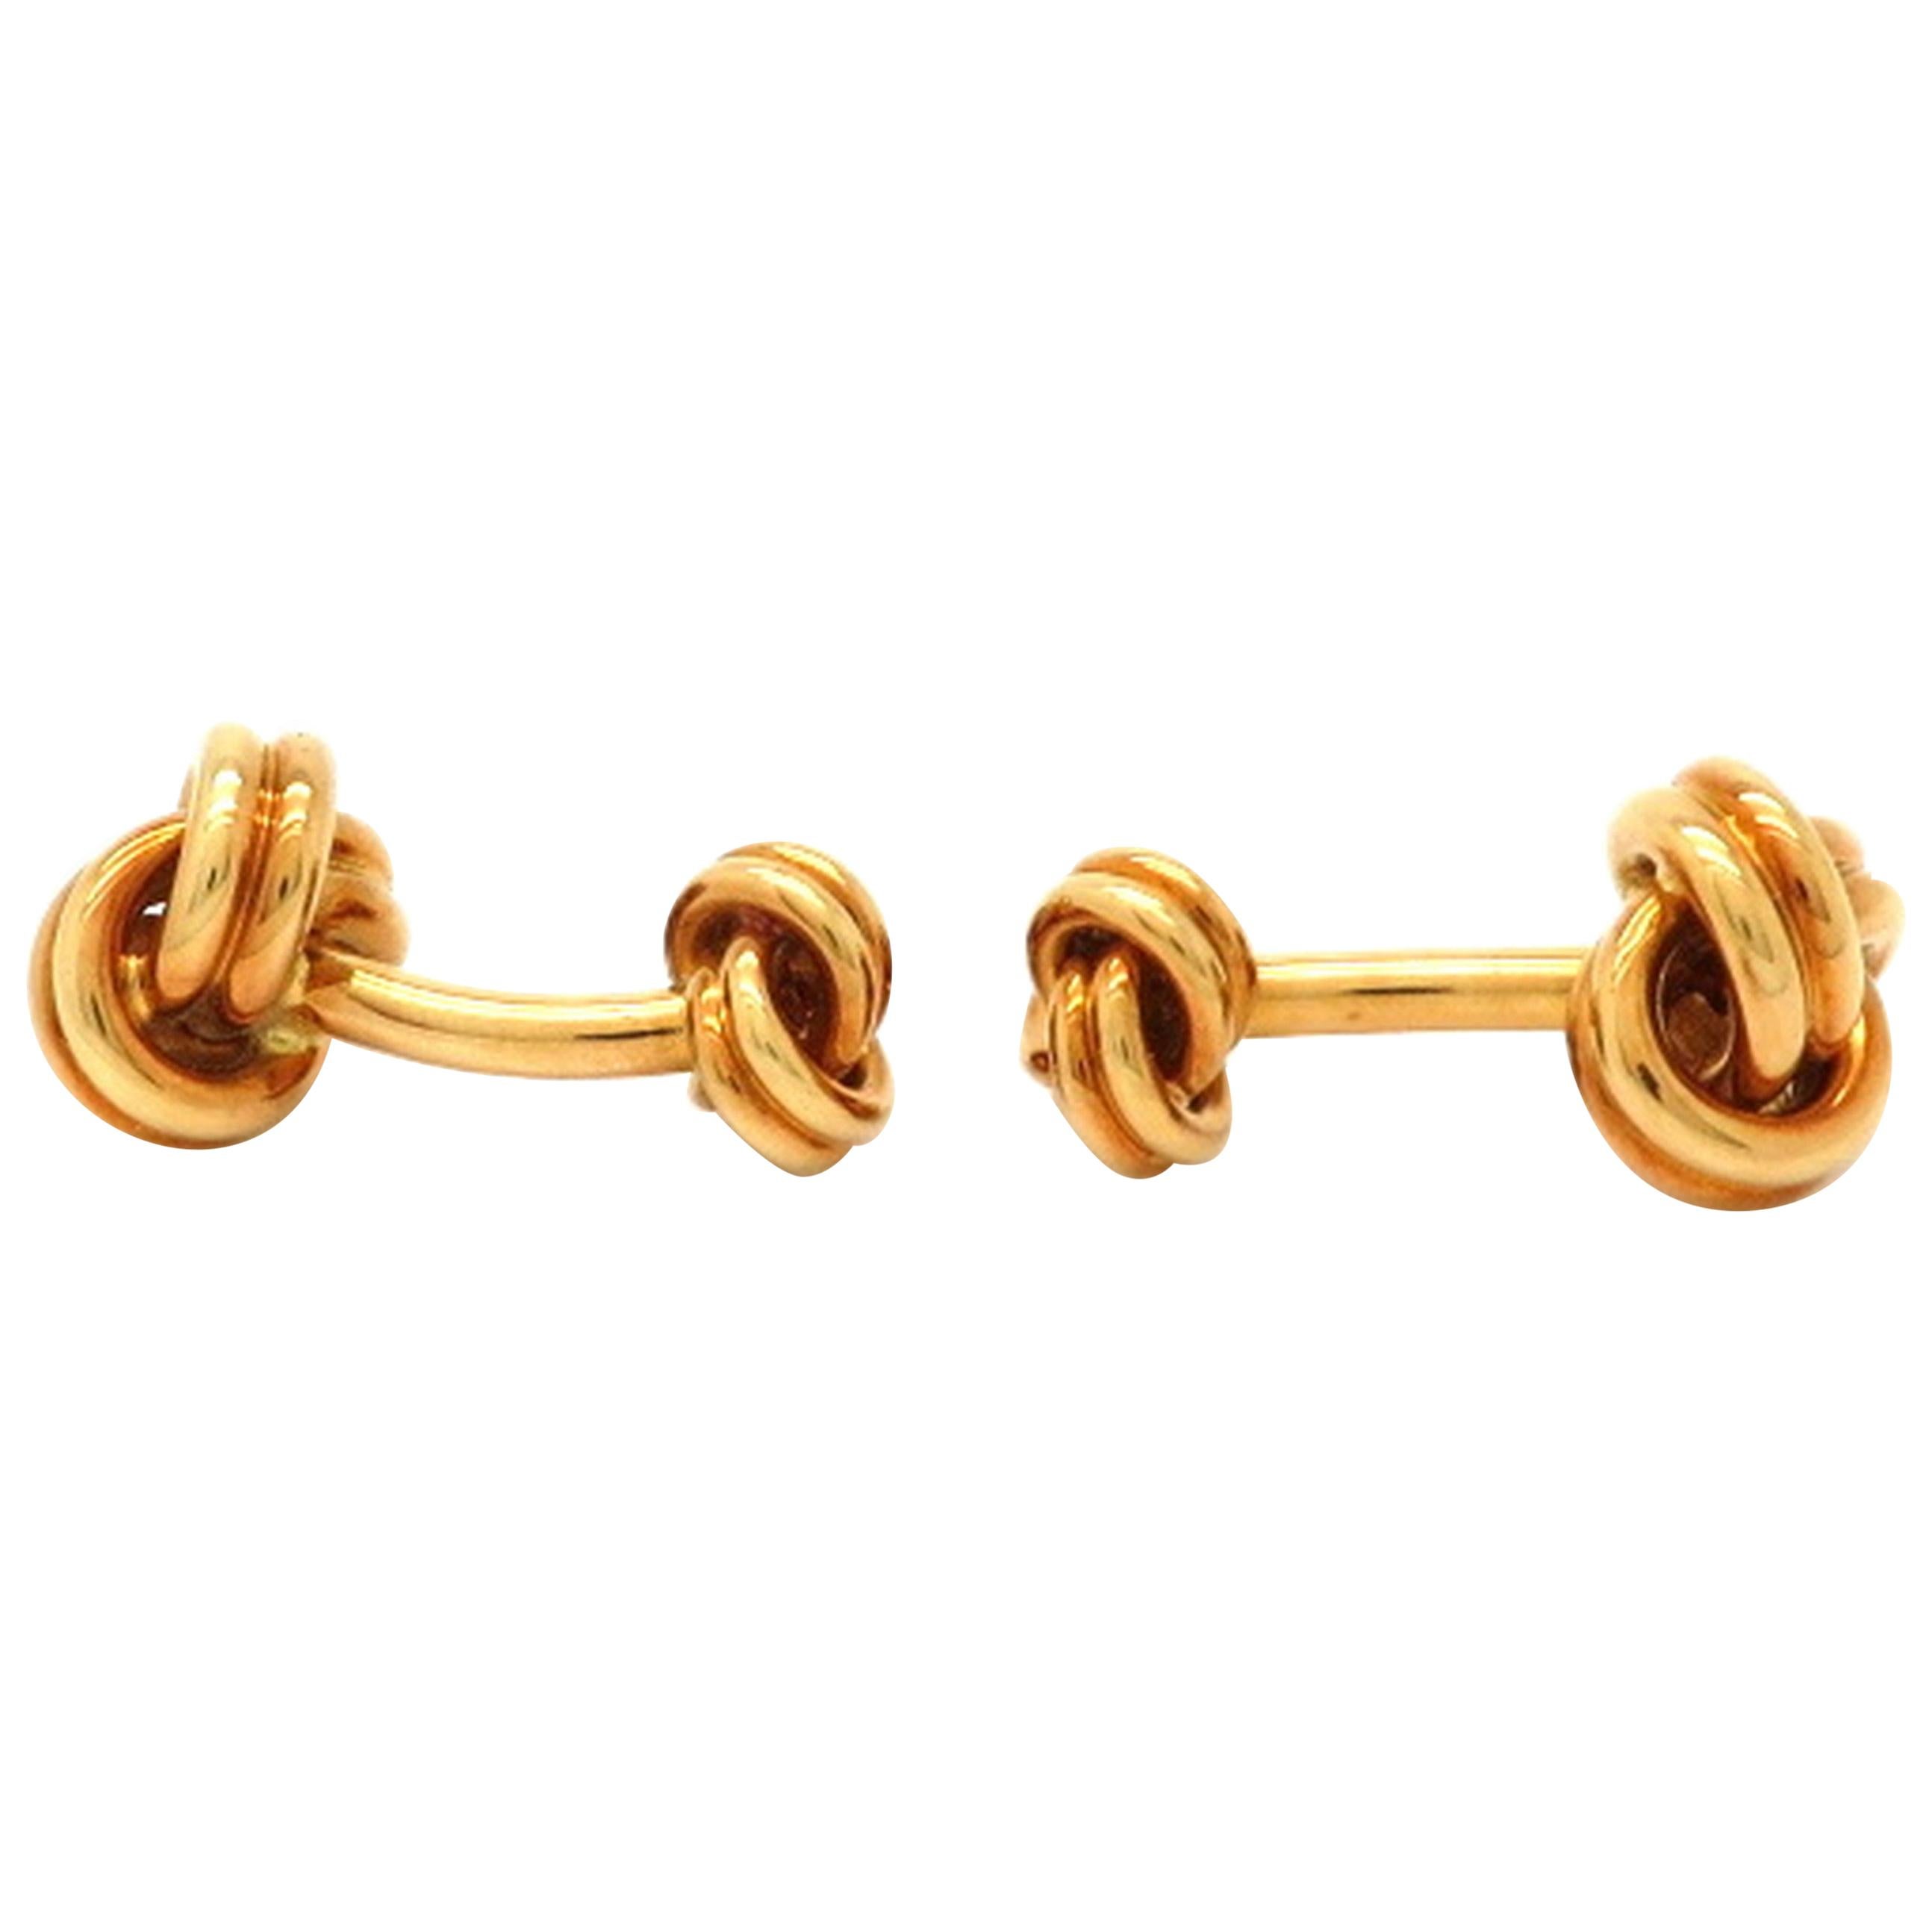 Estate Vintage 18 Karat Yellow Gold Tiffany & Co. Love Knot Cufflinks